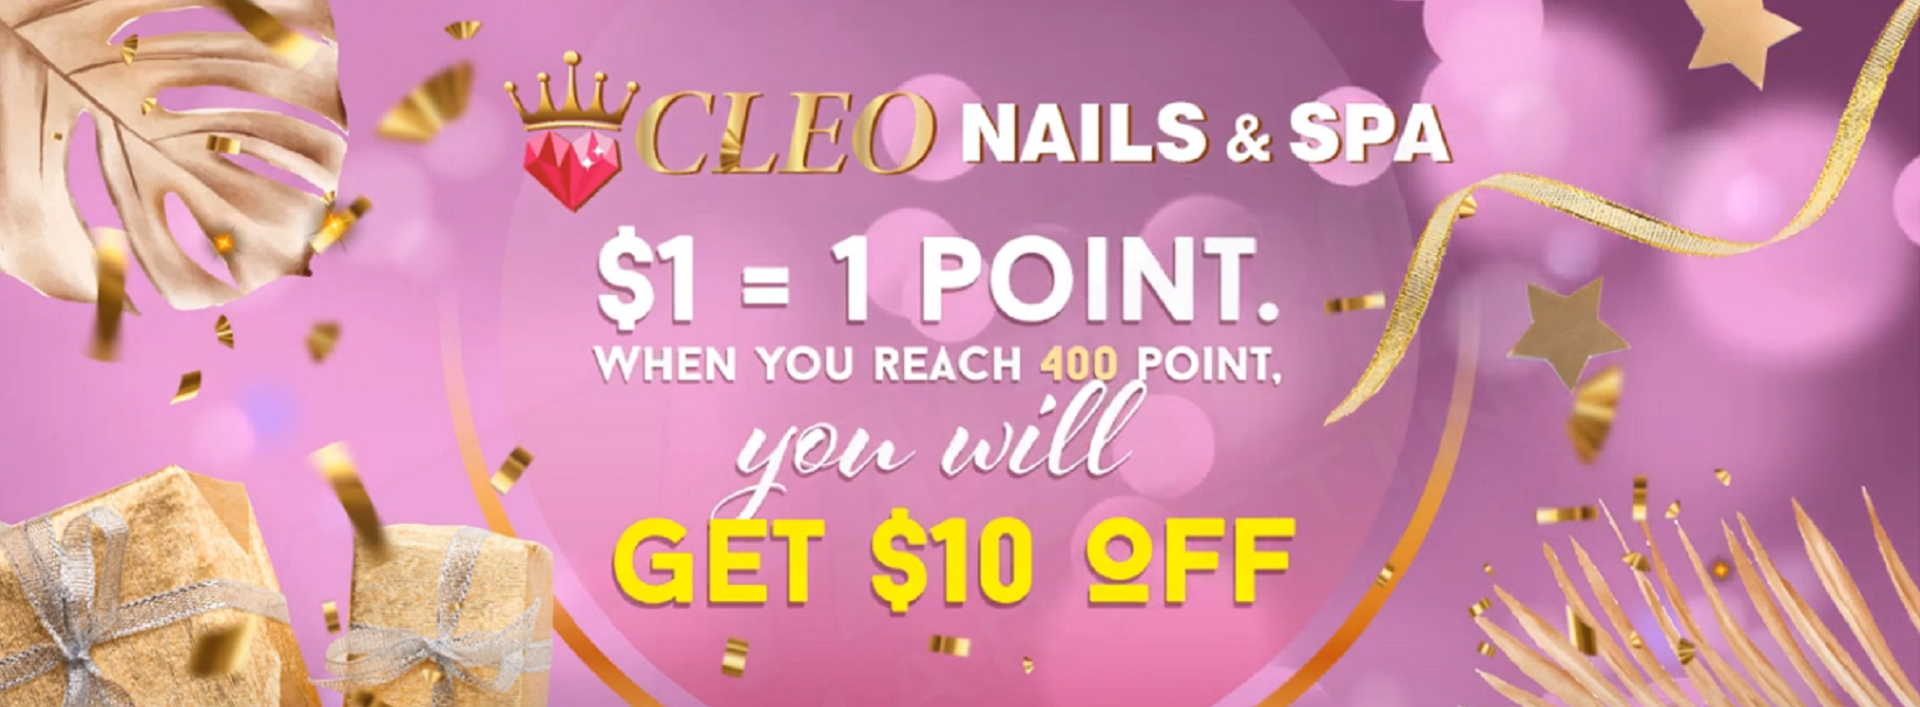 Cleo Nails & Spa - The best nail salon near me North York Toronto ON M9M 2S1